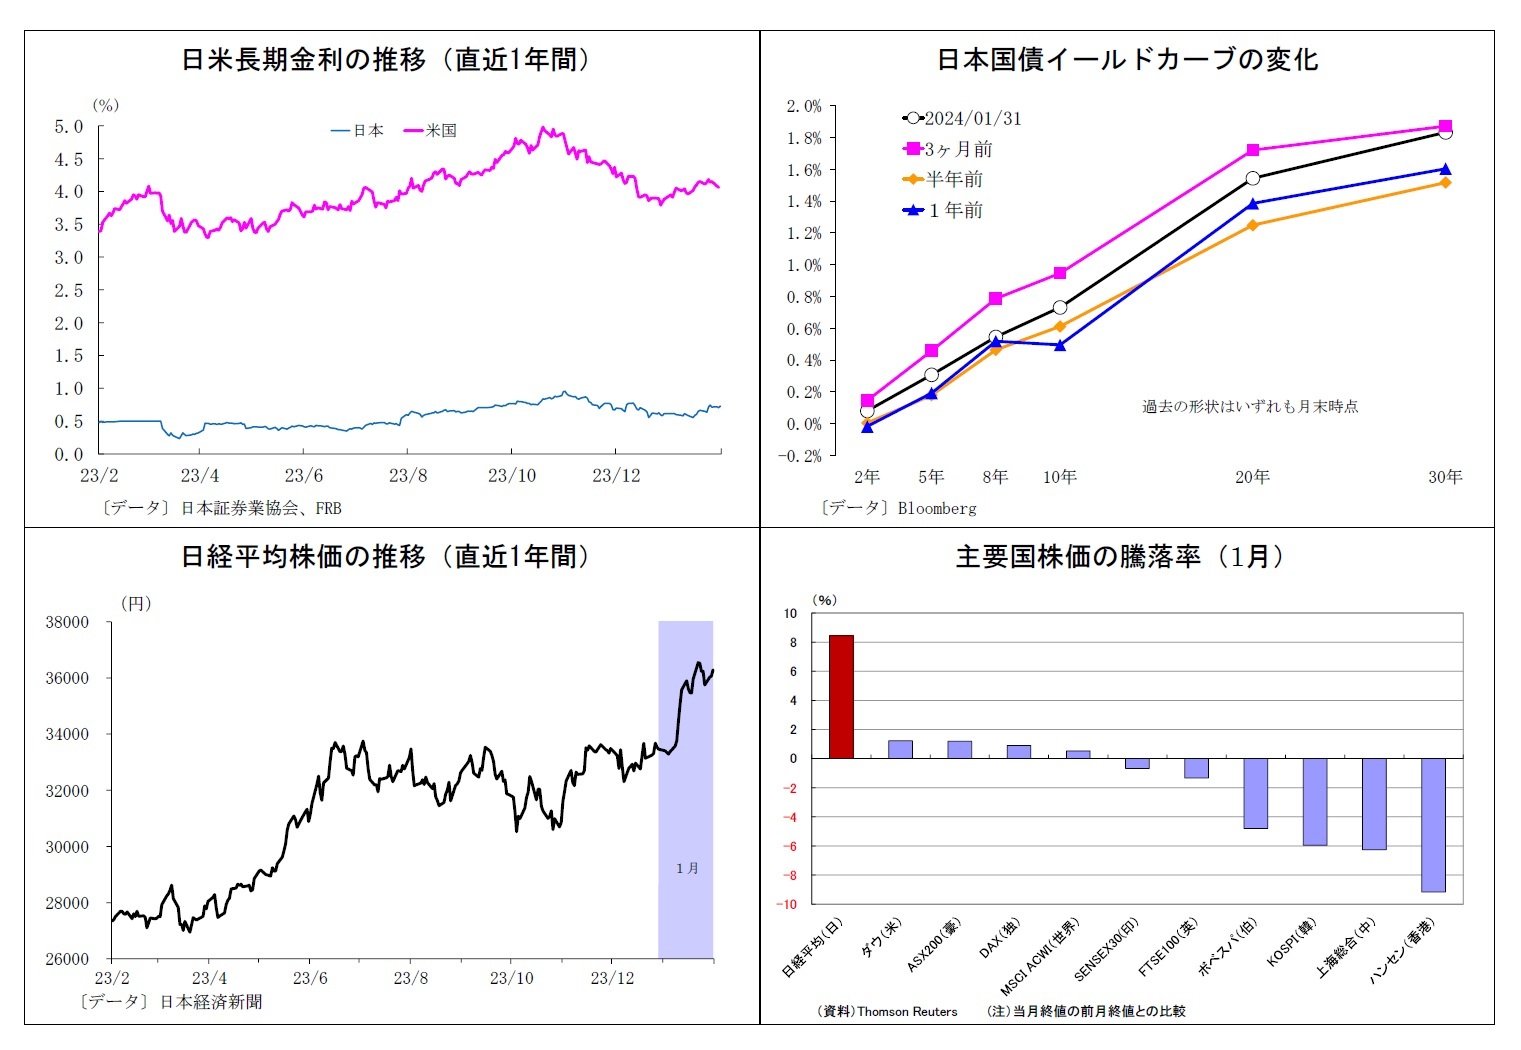 日米長期金利の推移（直近1年間）/日本国債イールドカーブの変化/日経平均株価の推移（直近1年間）/主要国株価の騰落率（1月）